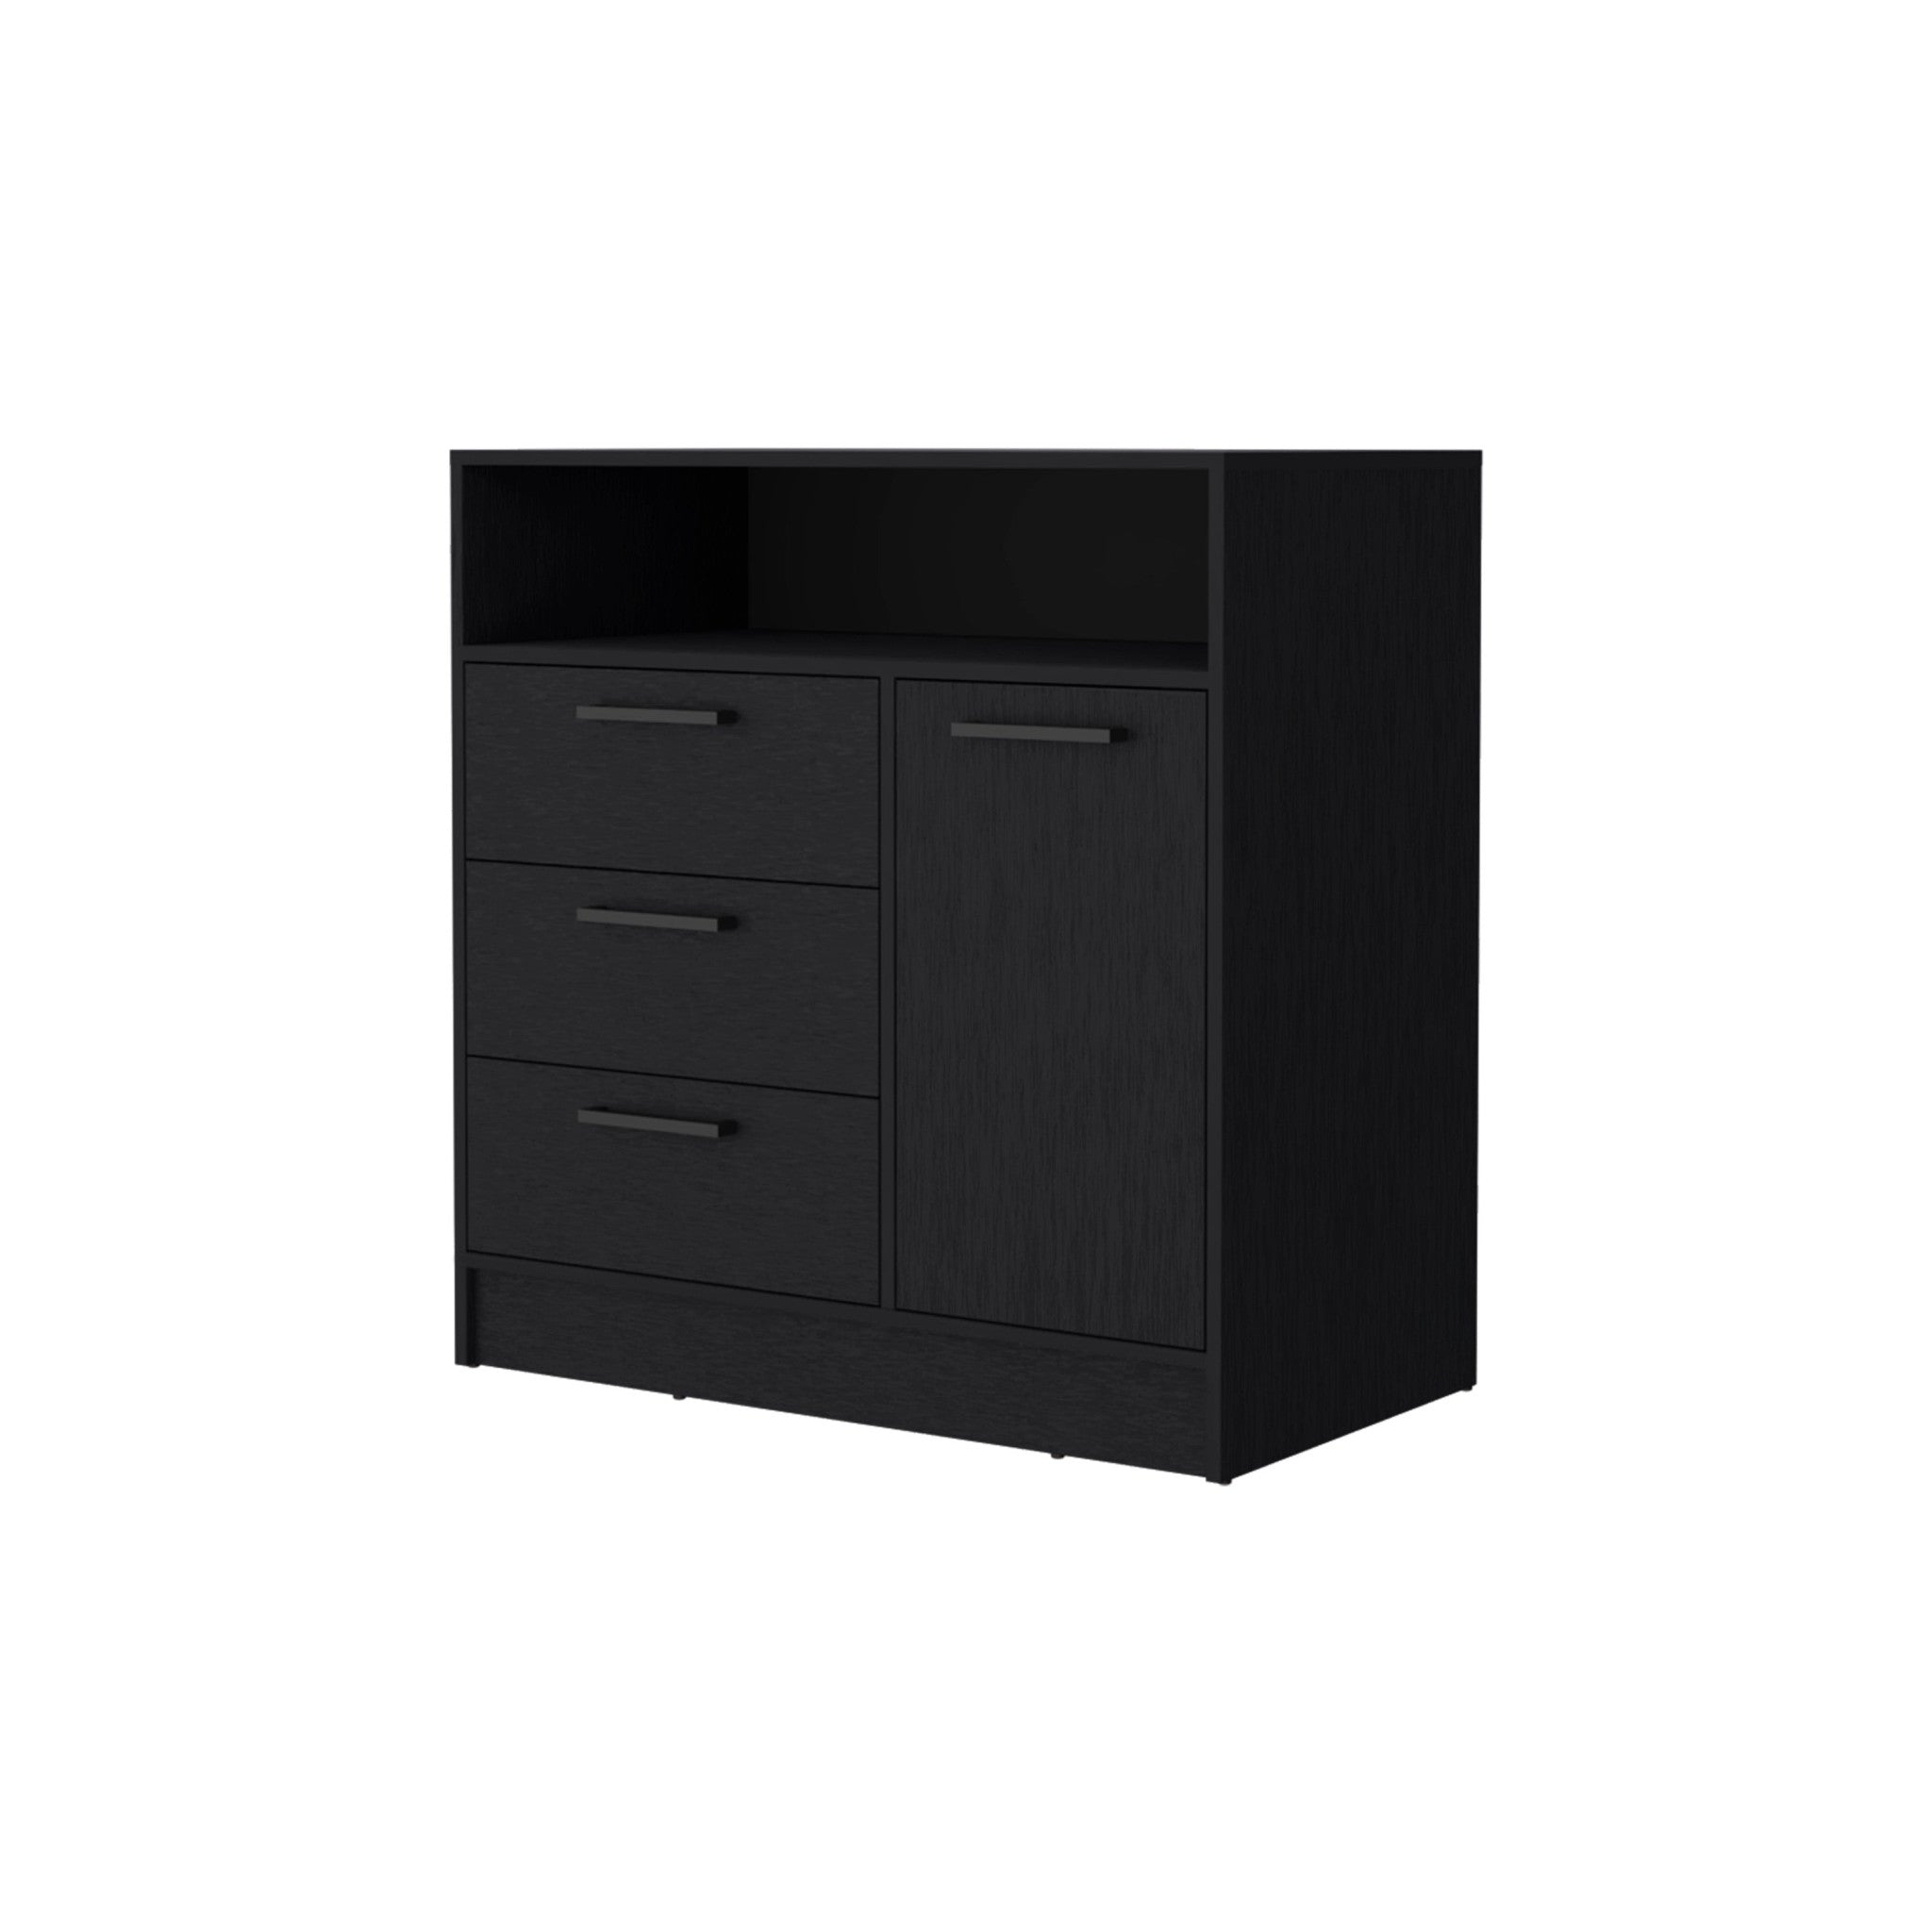 35" Black Three Drawer Dresser